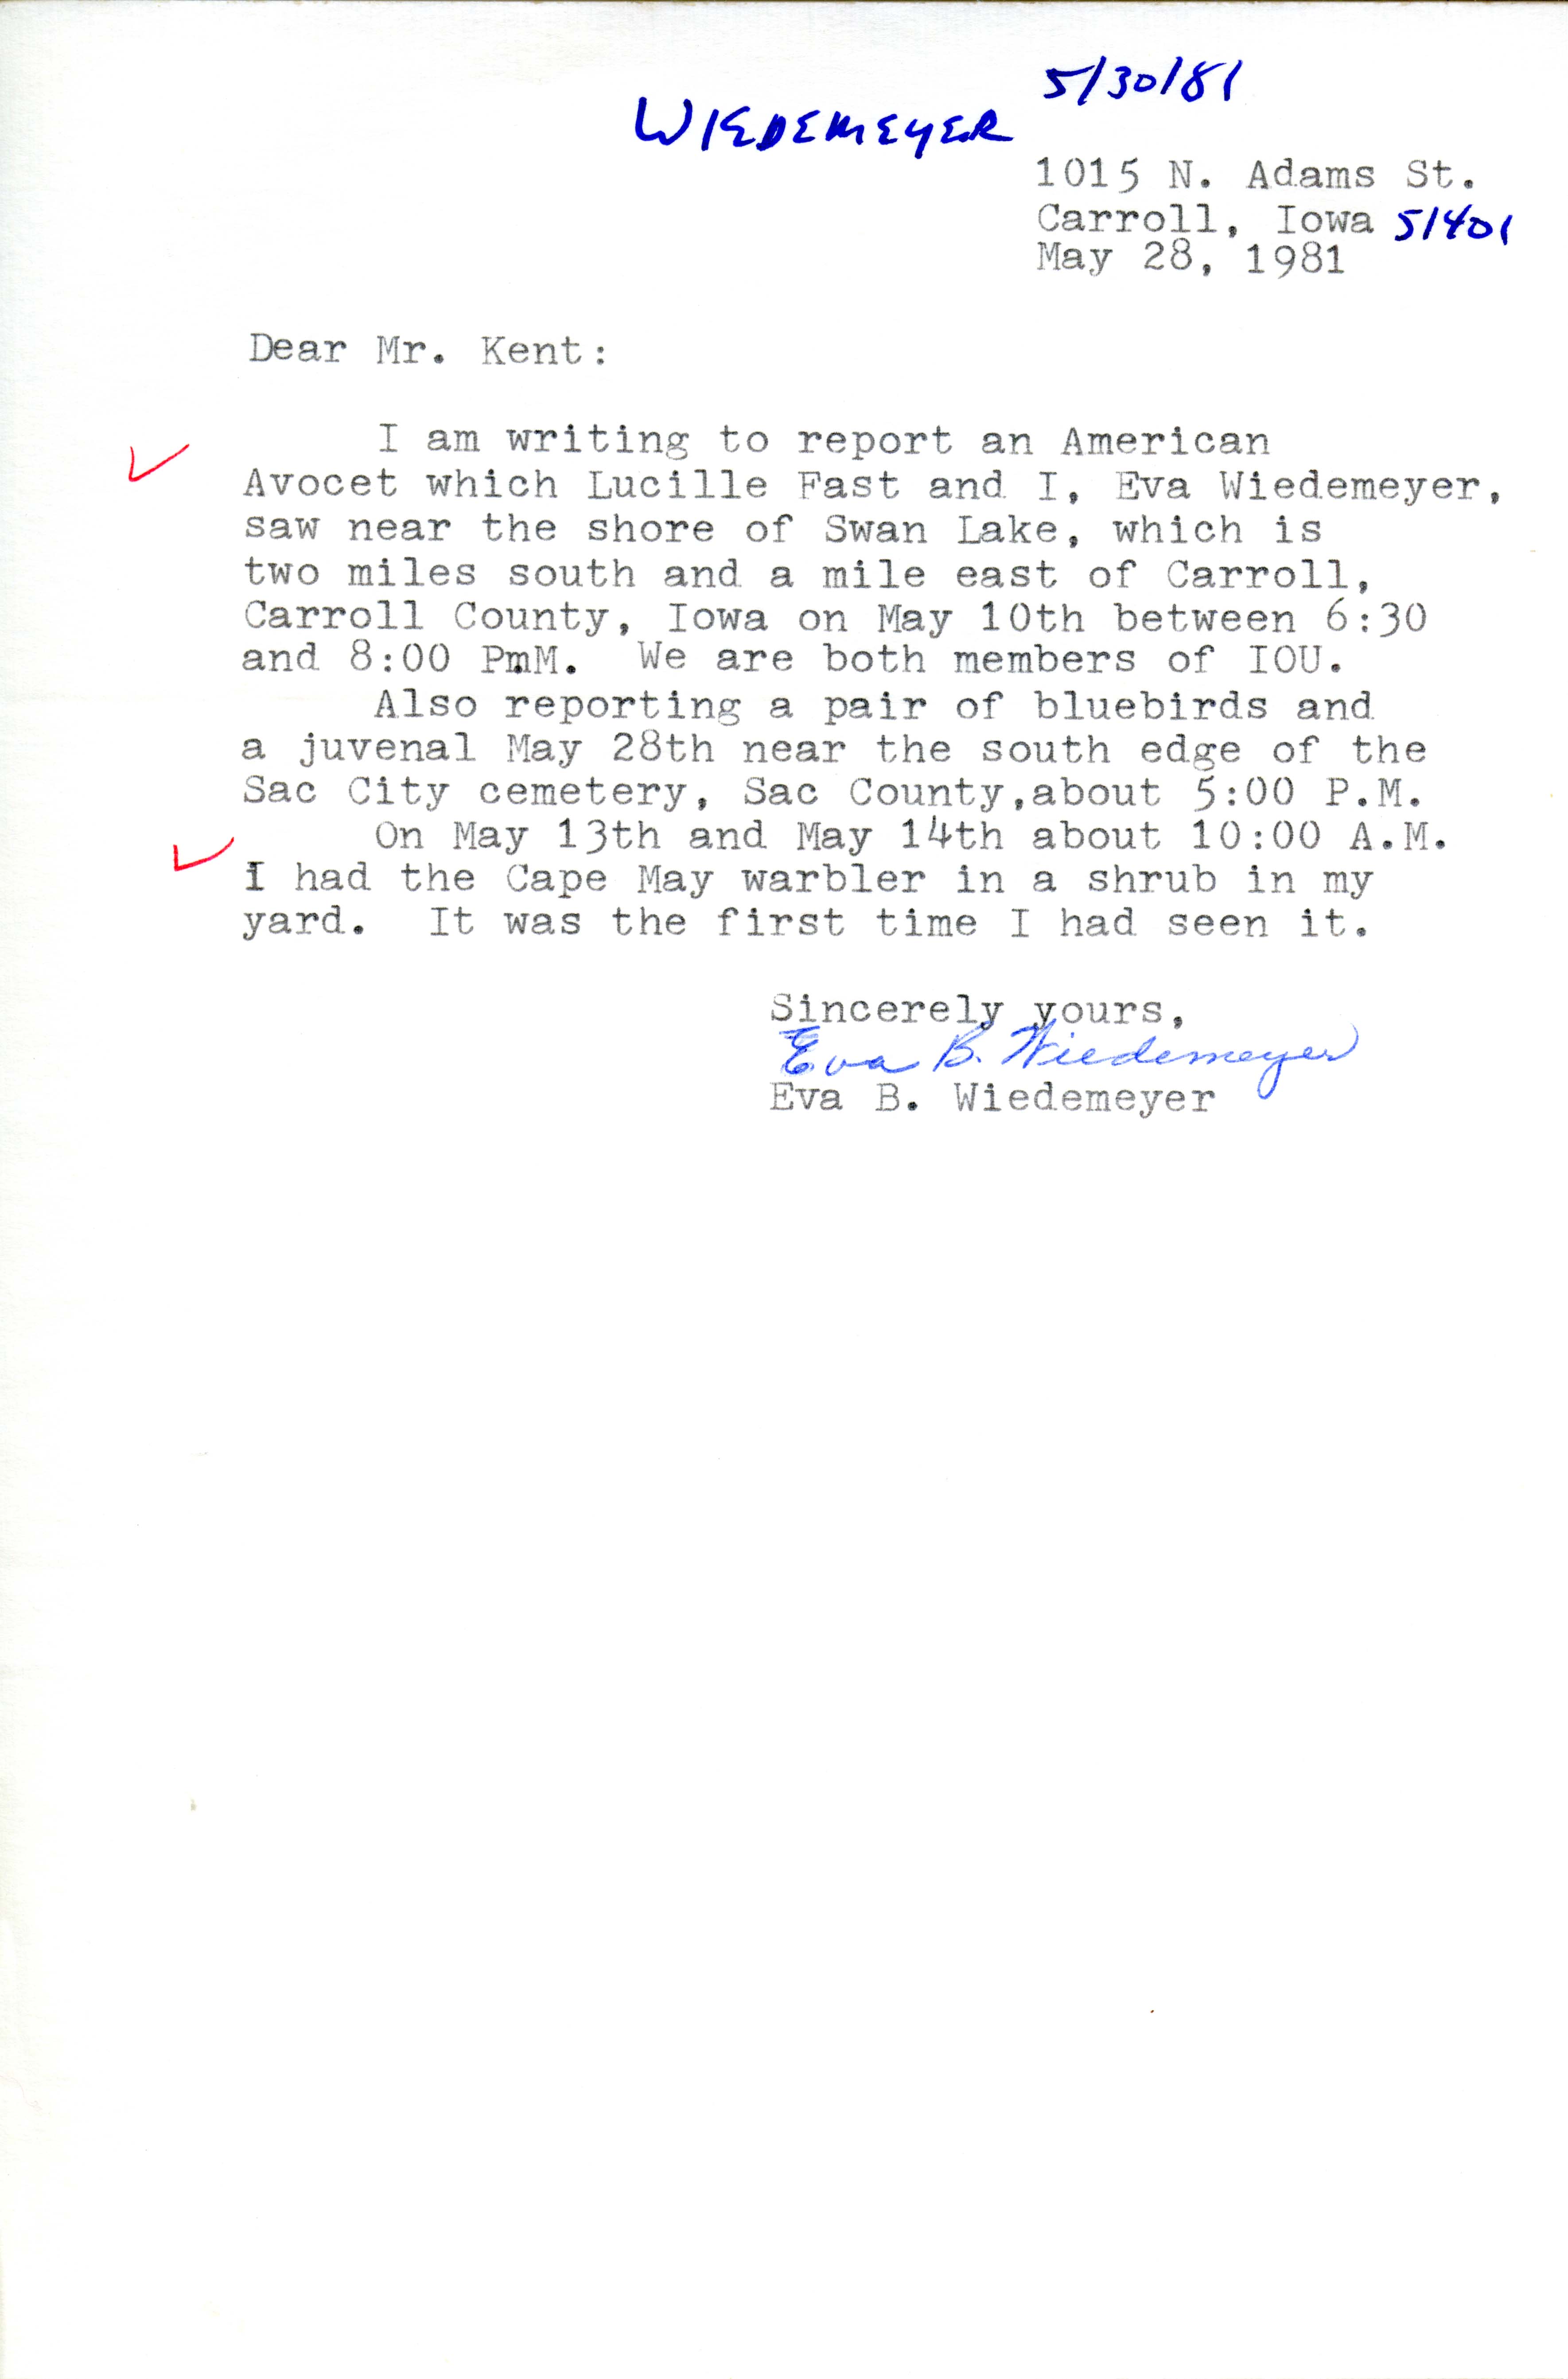 Eva Wiedemeyer letter to Thomas Kent regarding birds sighted, May 28, 1981